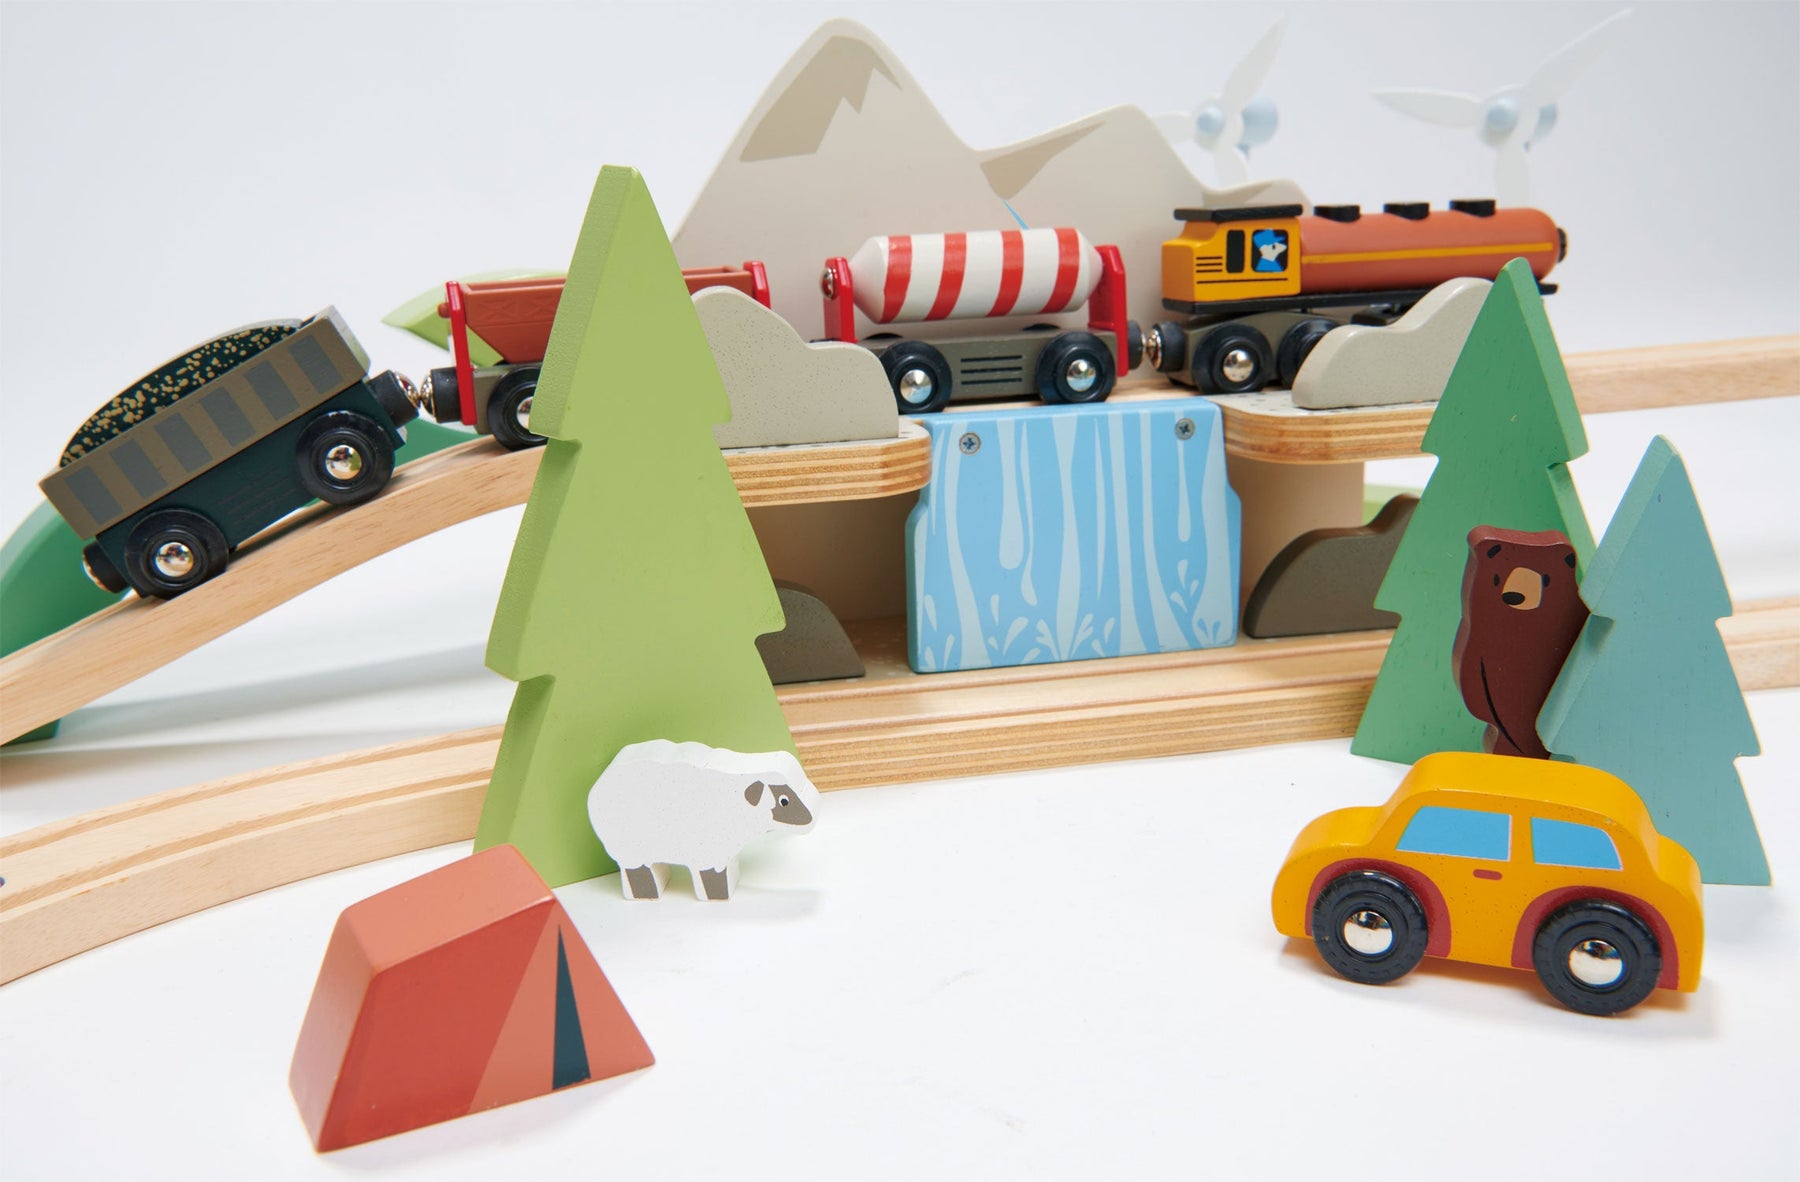 Tender Leaf Toys Kids Wooden Treetops Train Set